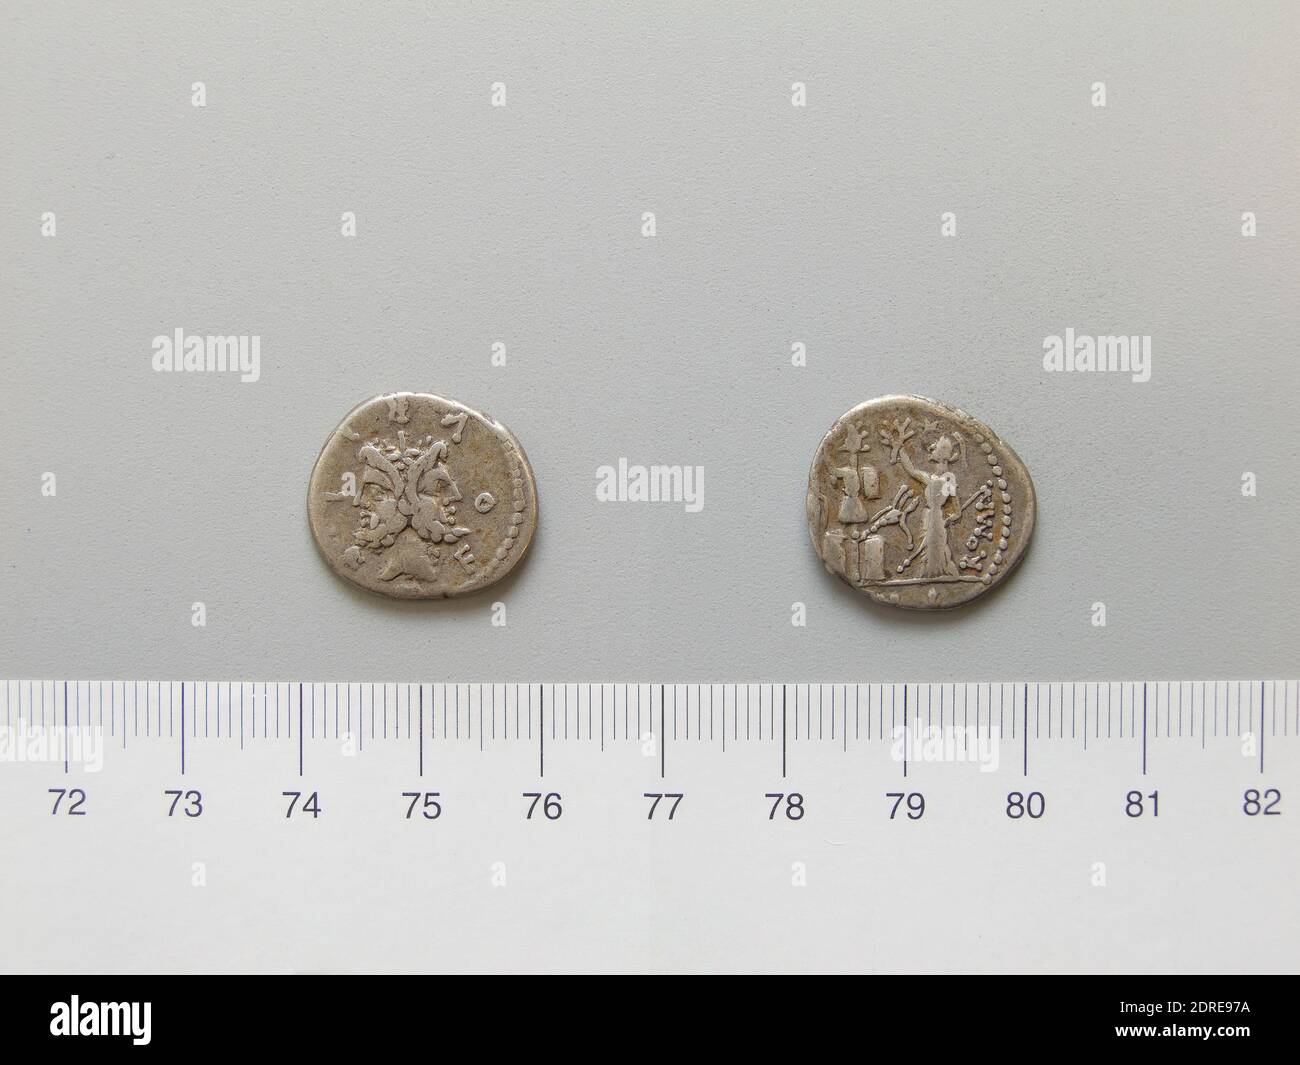 Mint: Rome, Magistrate: M. FOVRI L.F PHILI, Denarius from Rome, 119 B.C., Silver, 3.81 g, 5:00, 19 mm, Made in Rome, Italy, Roman, 2nd century B.C., Numismatics Stock Photo